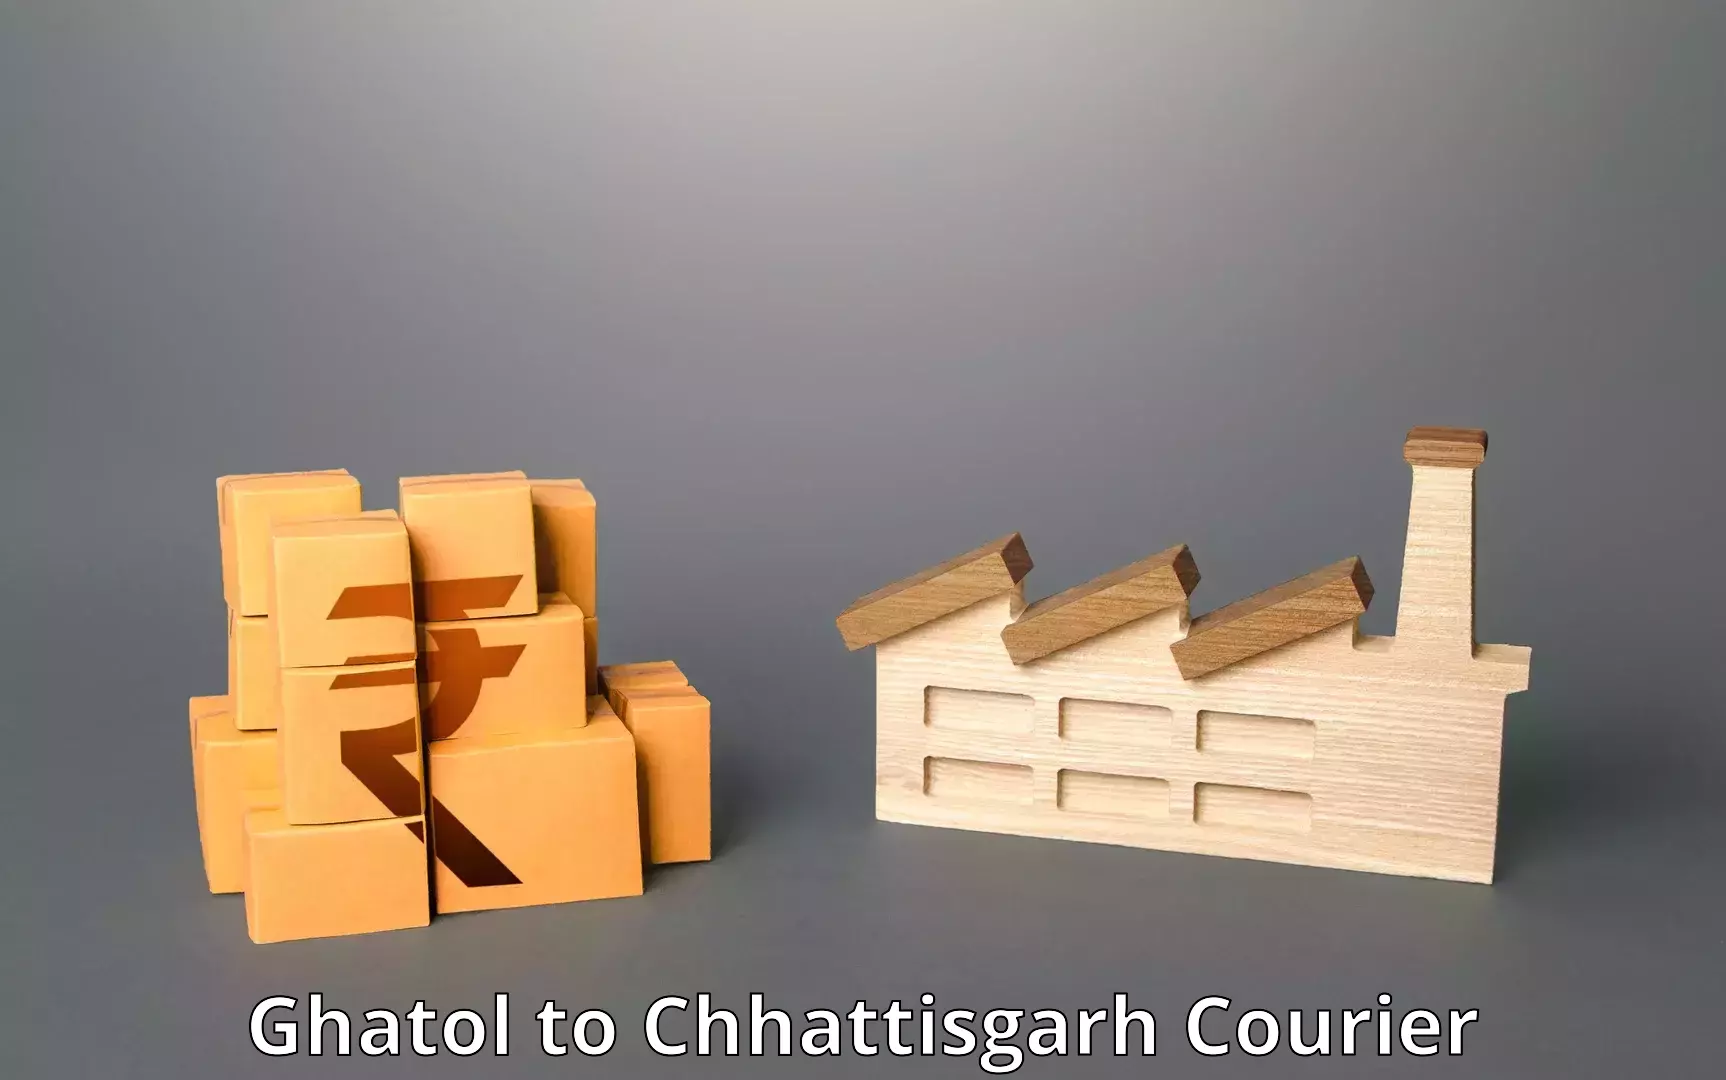 Courier service comparison Ghatol to Bastar